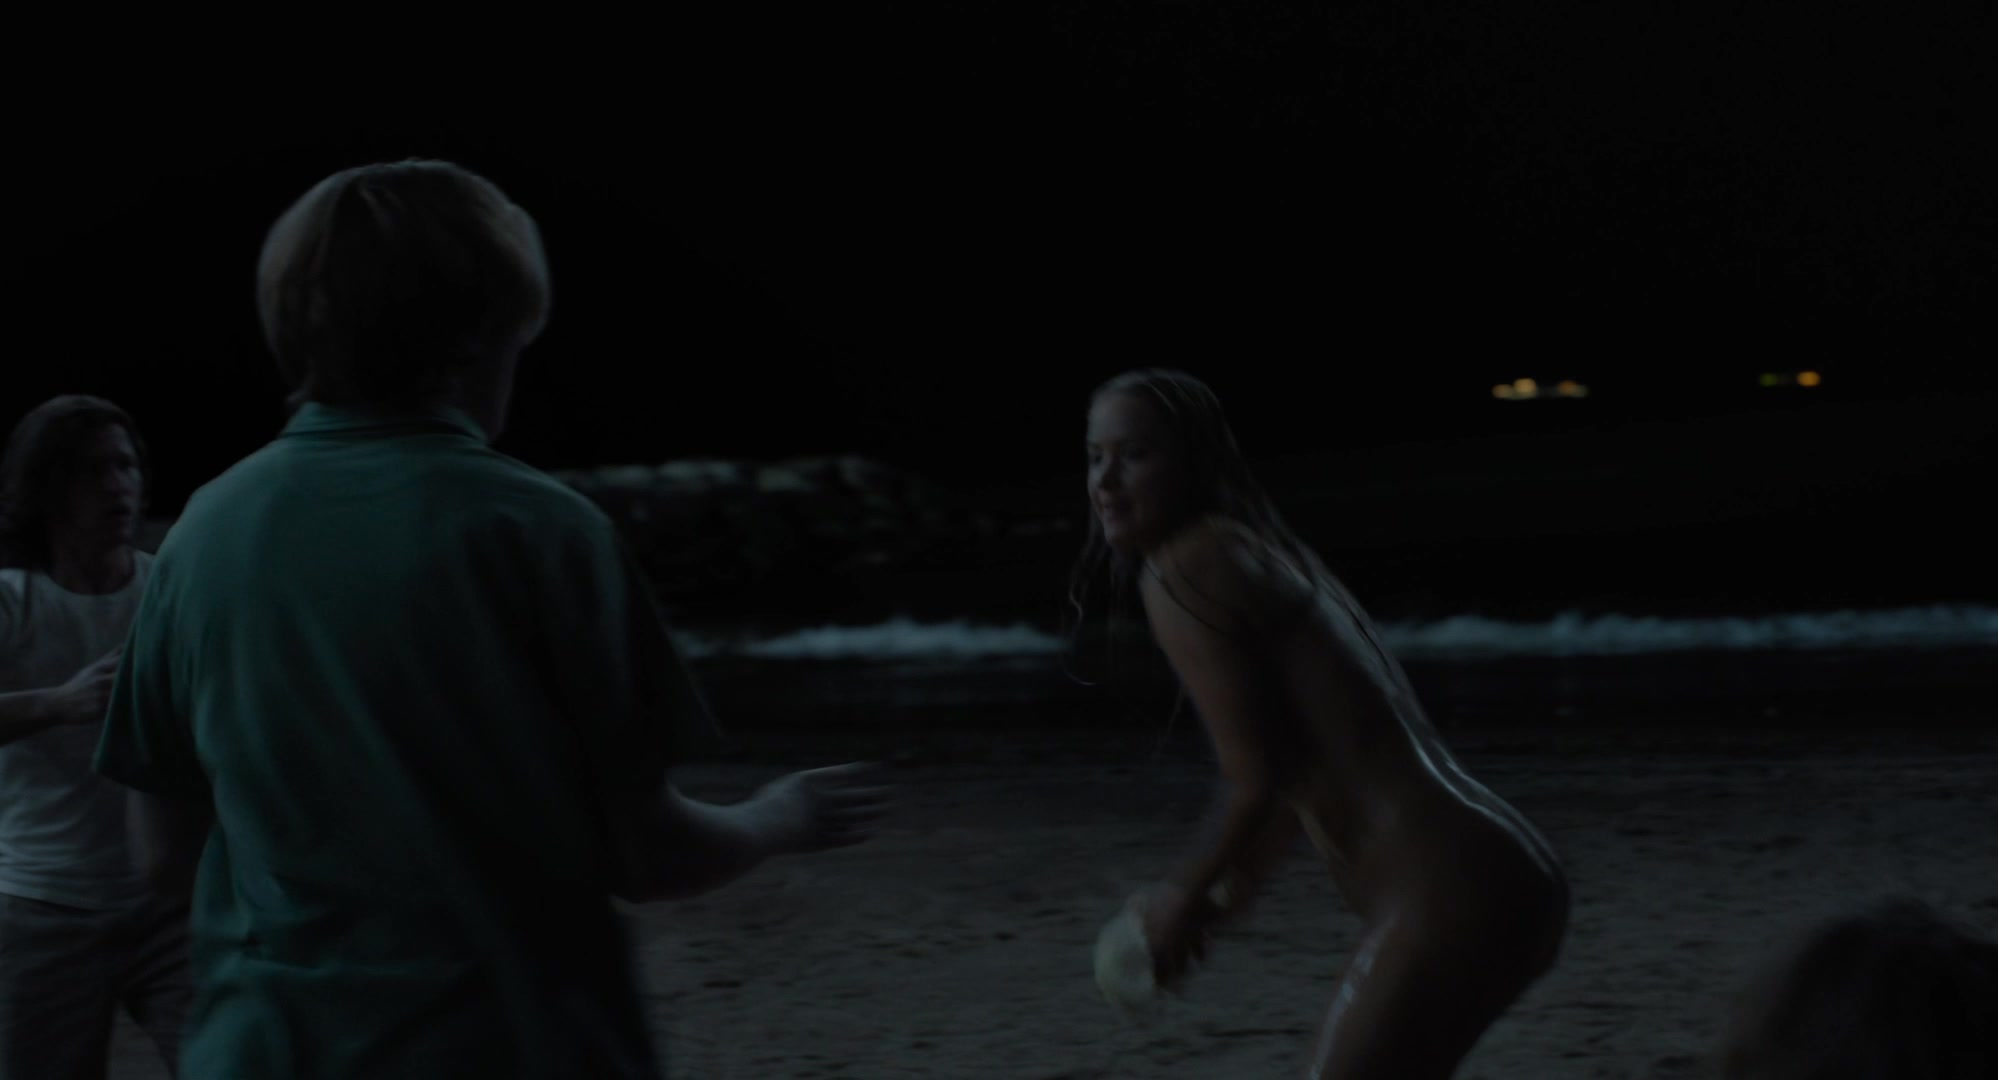 Nude video celebs » Jennifer Lawrence nude image